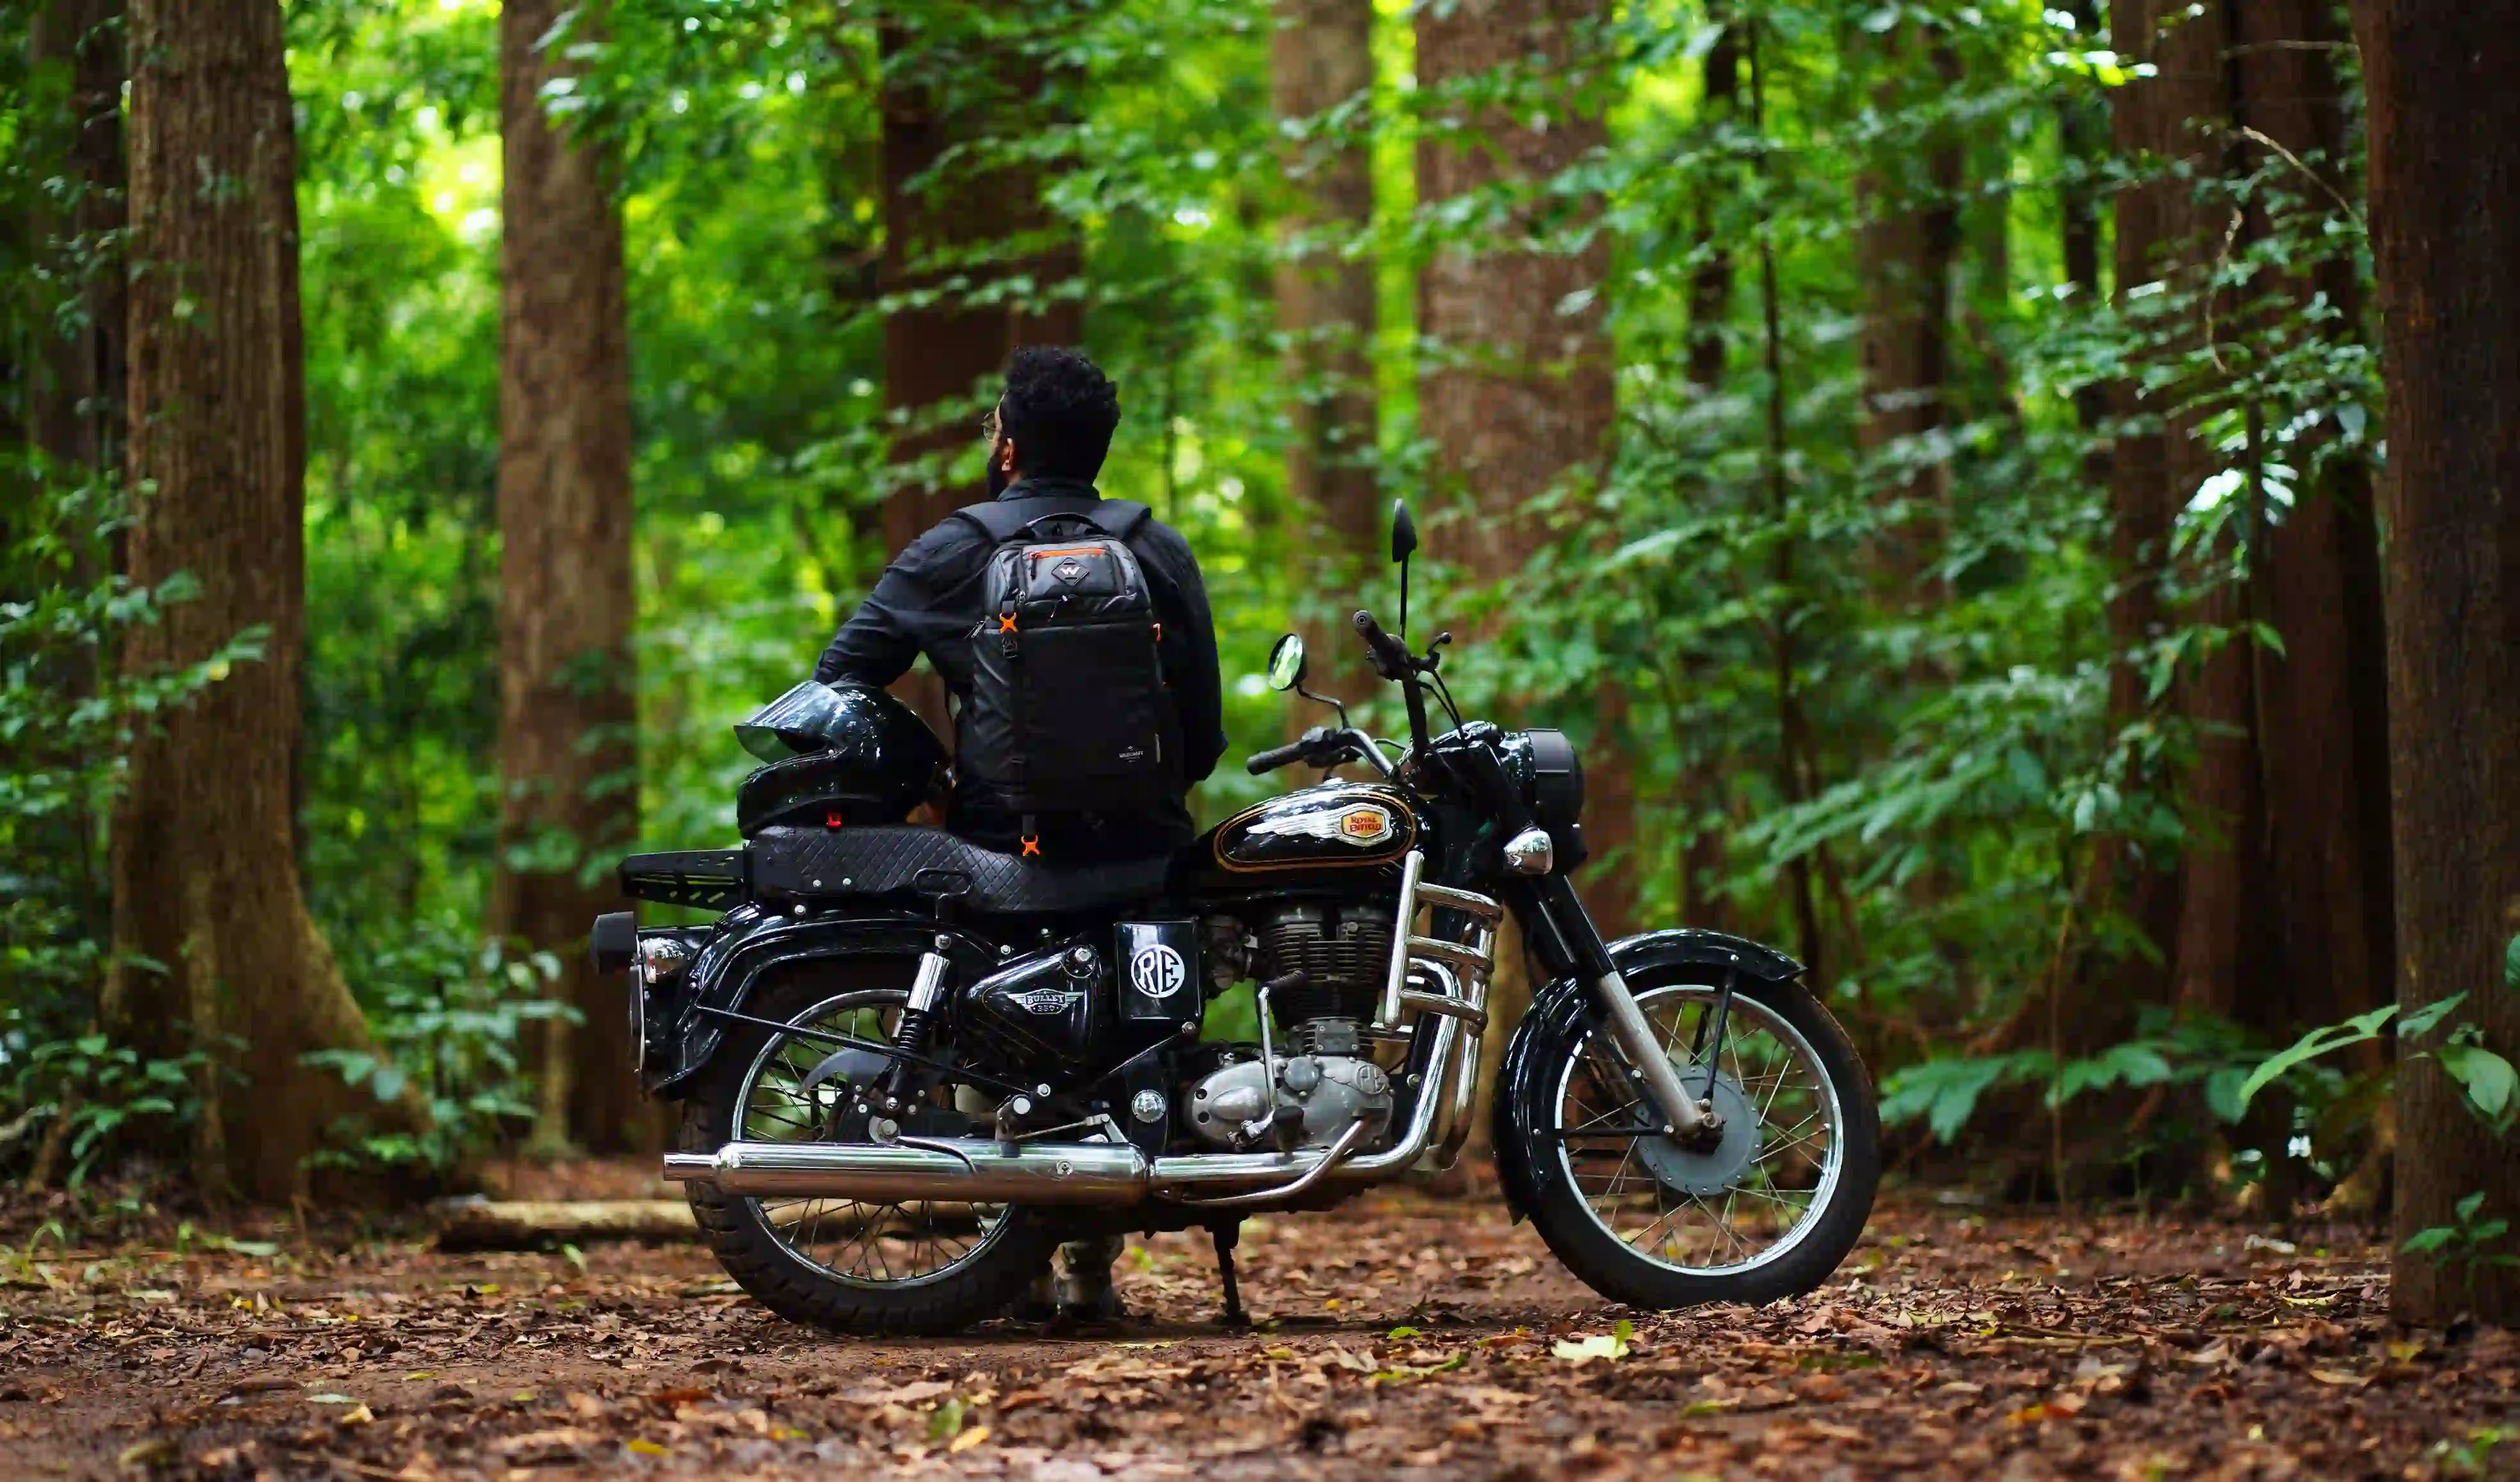 7 Days Bike Tour of Kerala from Trivandrum